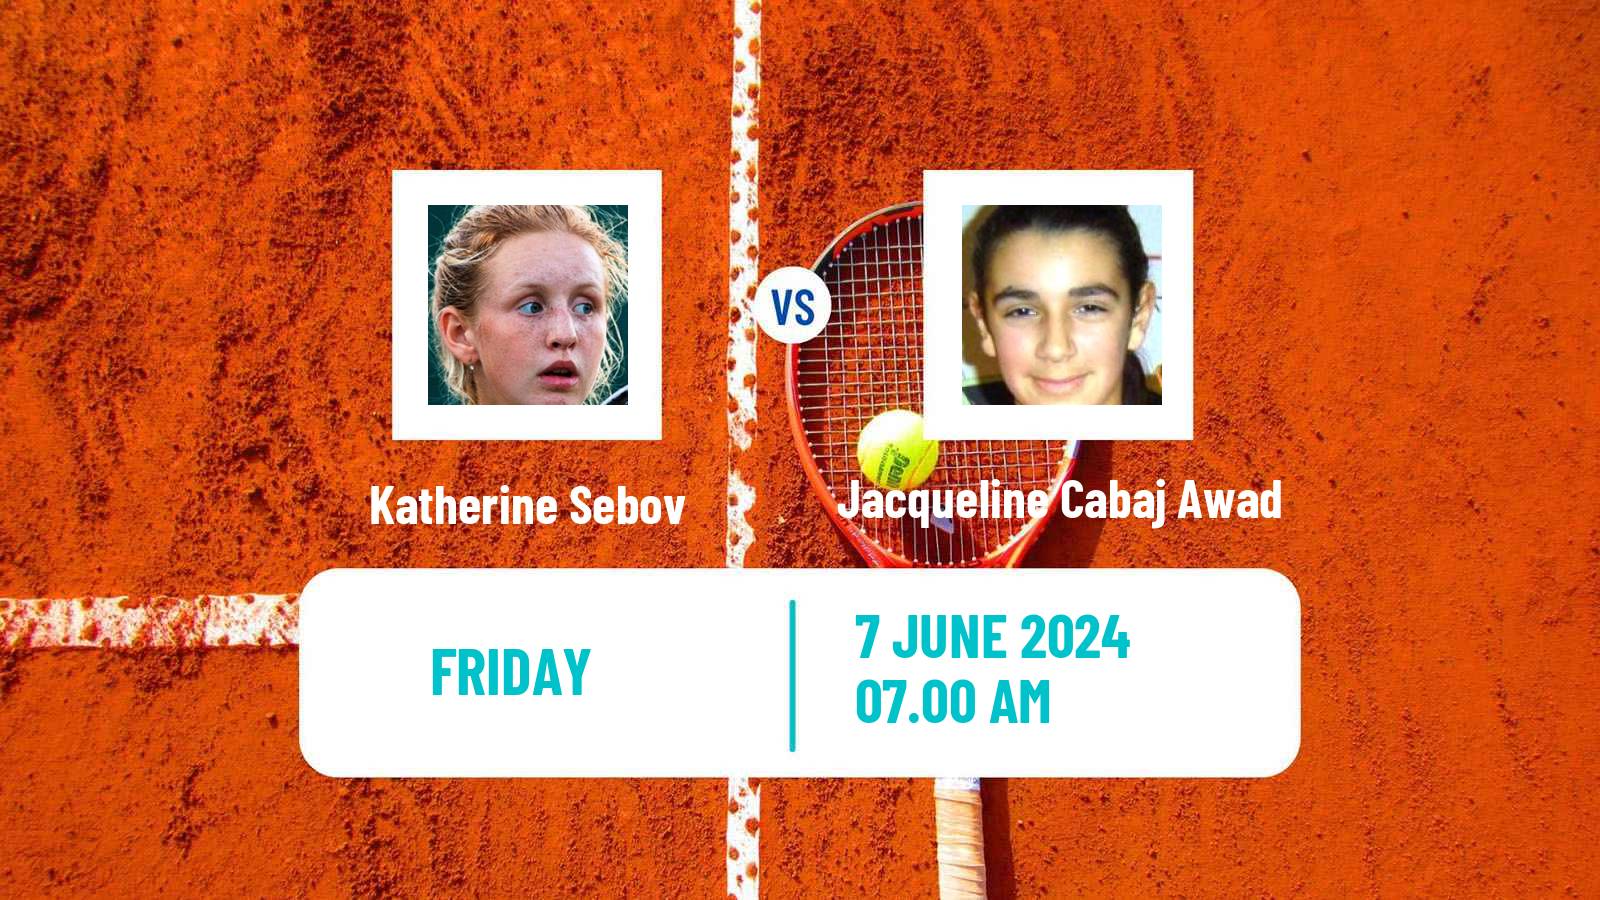 Tennis ITF W50 Montemor O Novo 2 Women Katherine Sebov - Jacqueline Cabaj Awad